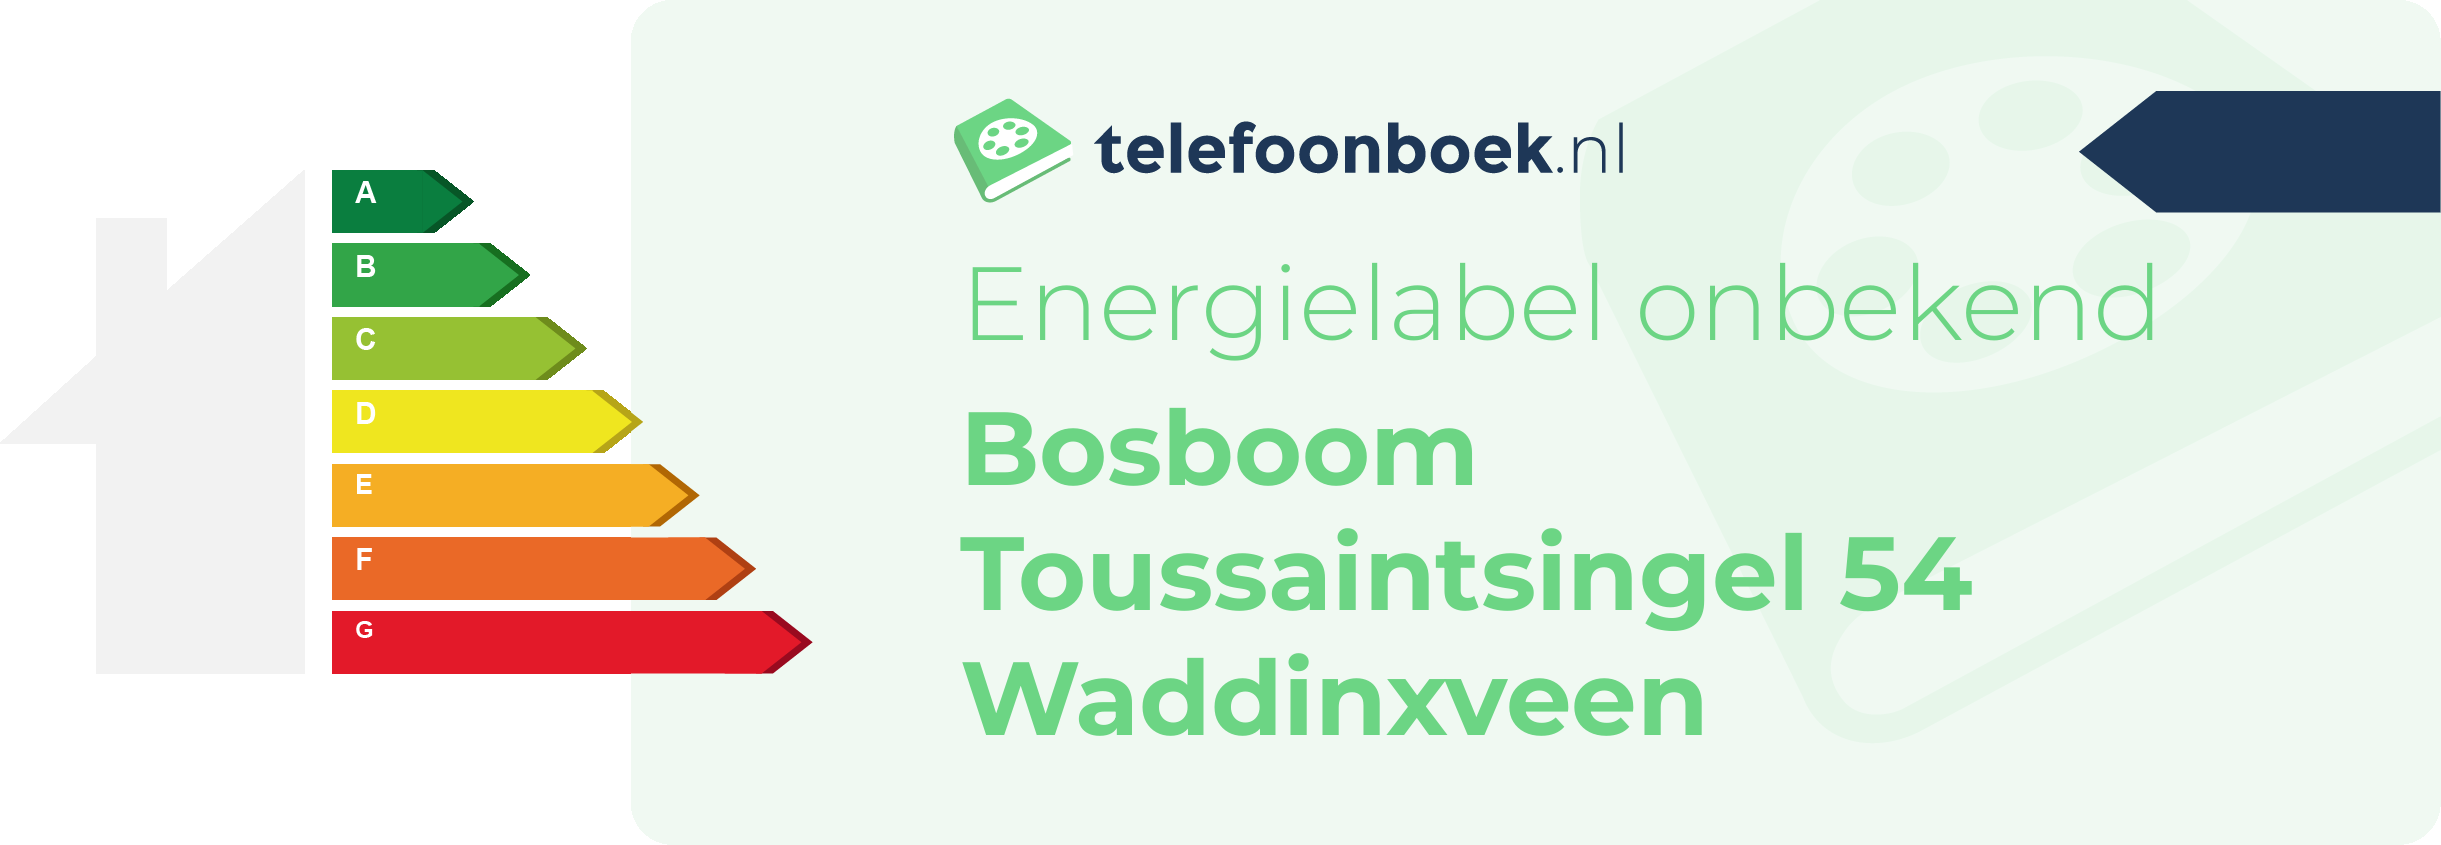 Energielabel Bosboom Toussaintsingel 54 Waddinxveen